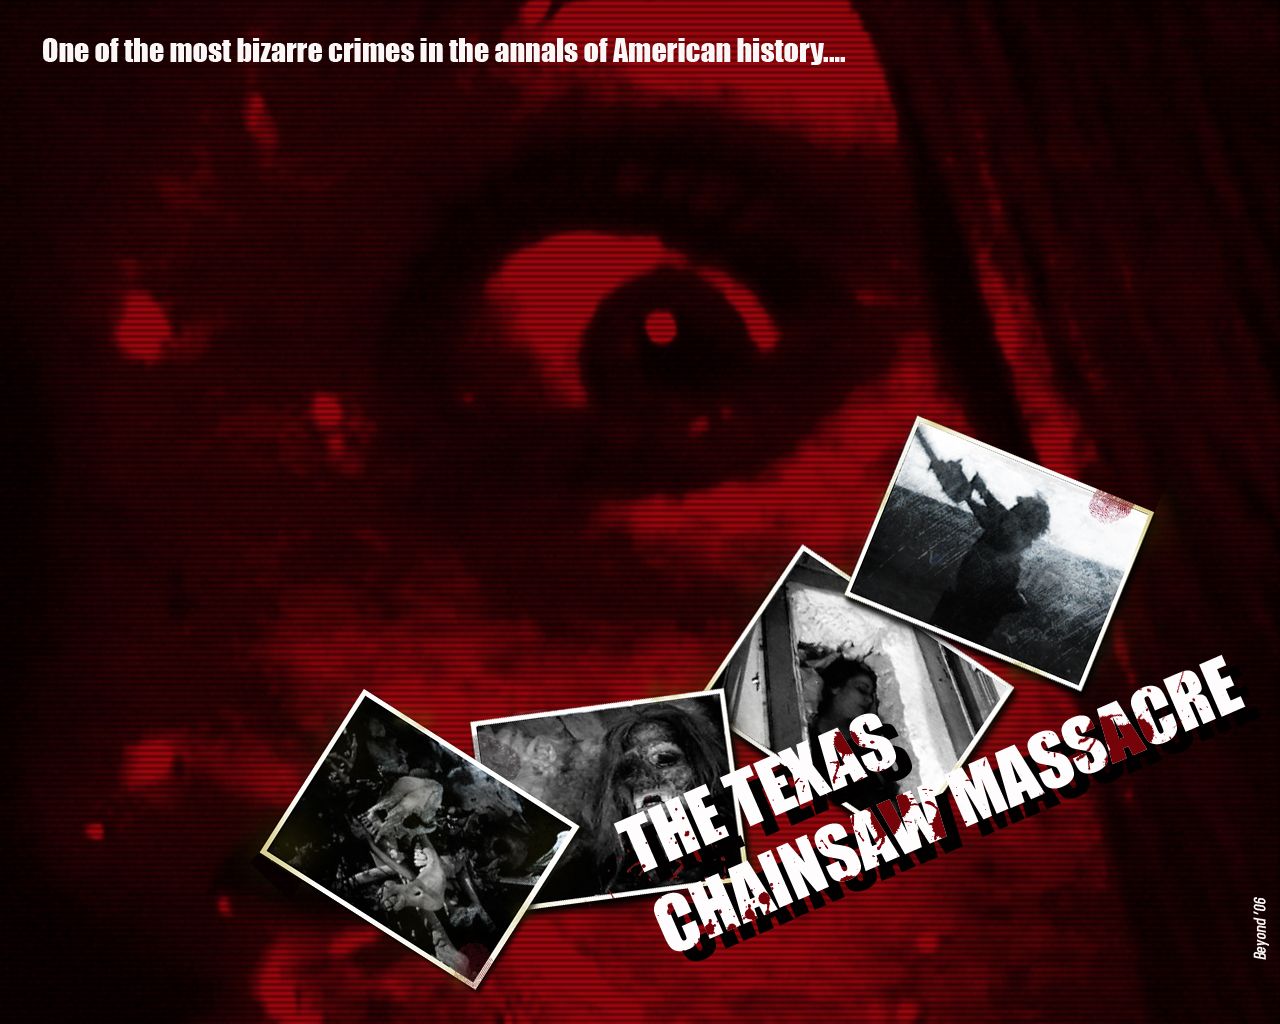 Texas Chainsaw Massacre - 70s Horror Wallpaper 26682514 - Fanpop